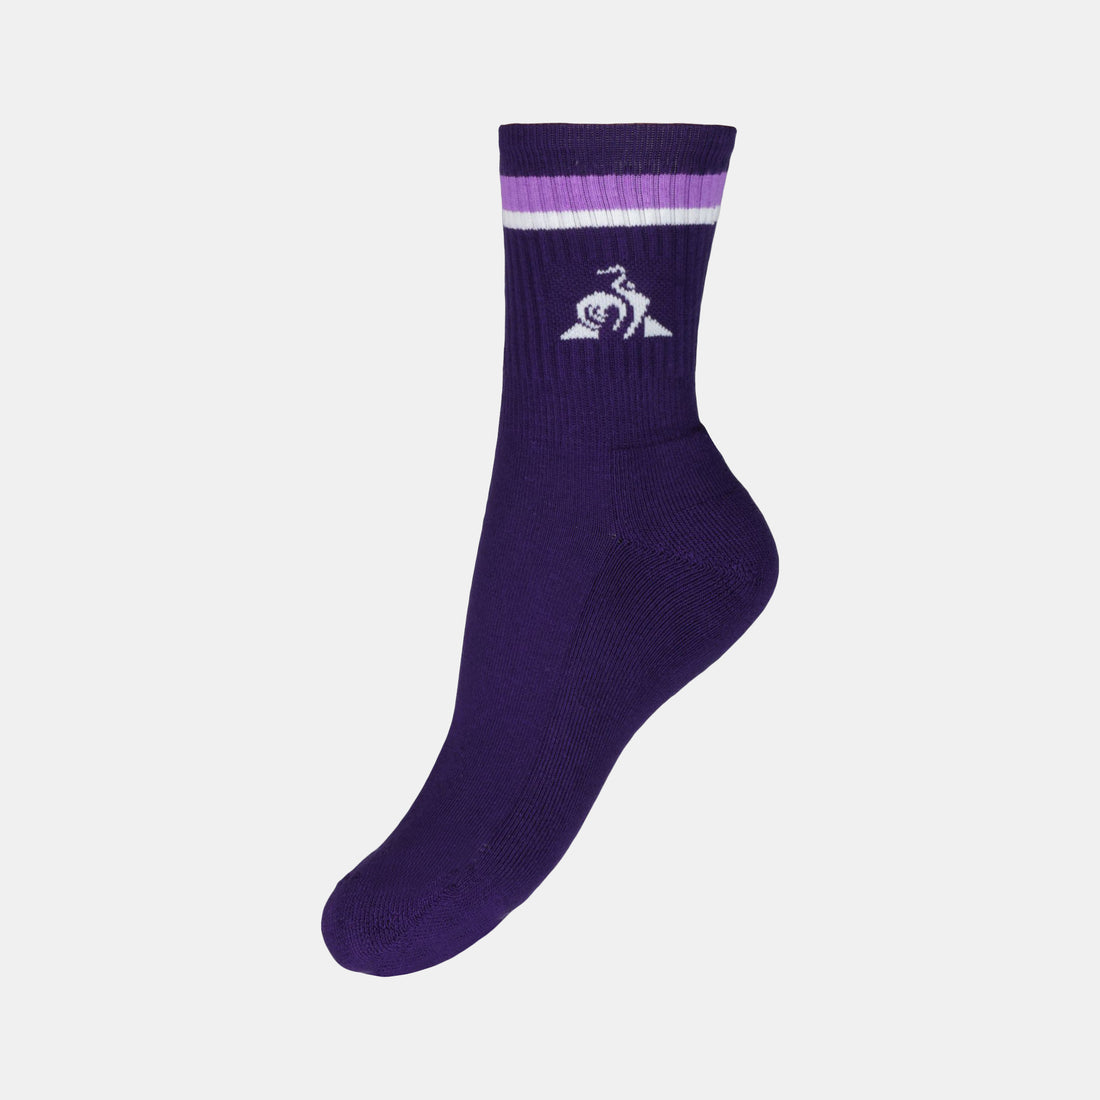 2410528-TENNIS Chaussettes 24 purple velvet  | Socken de sport für Herren